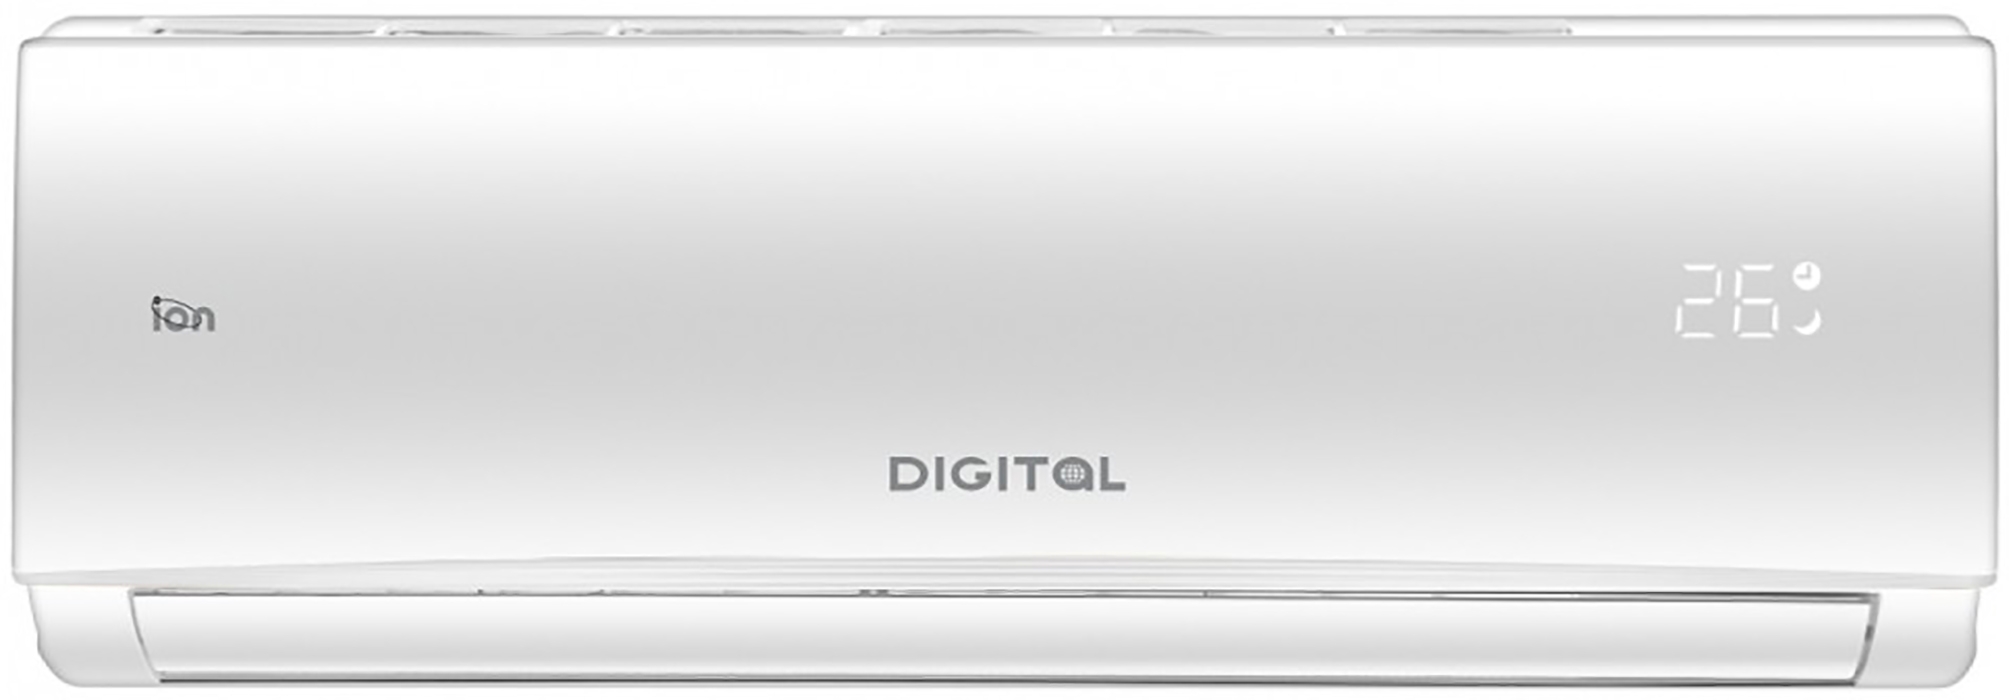 Кондиционер сплит-система Digital DAC-i12EWT (Wi-Fi ready) цена 17845.00 грн - фотография 2